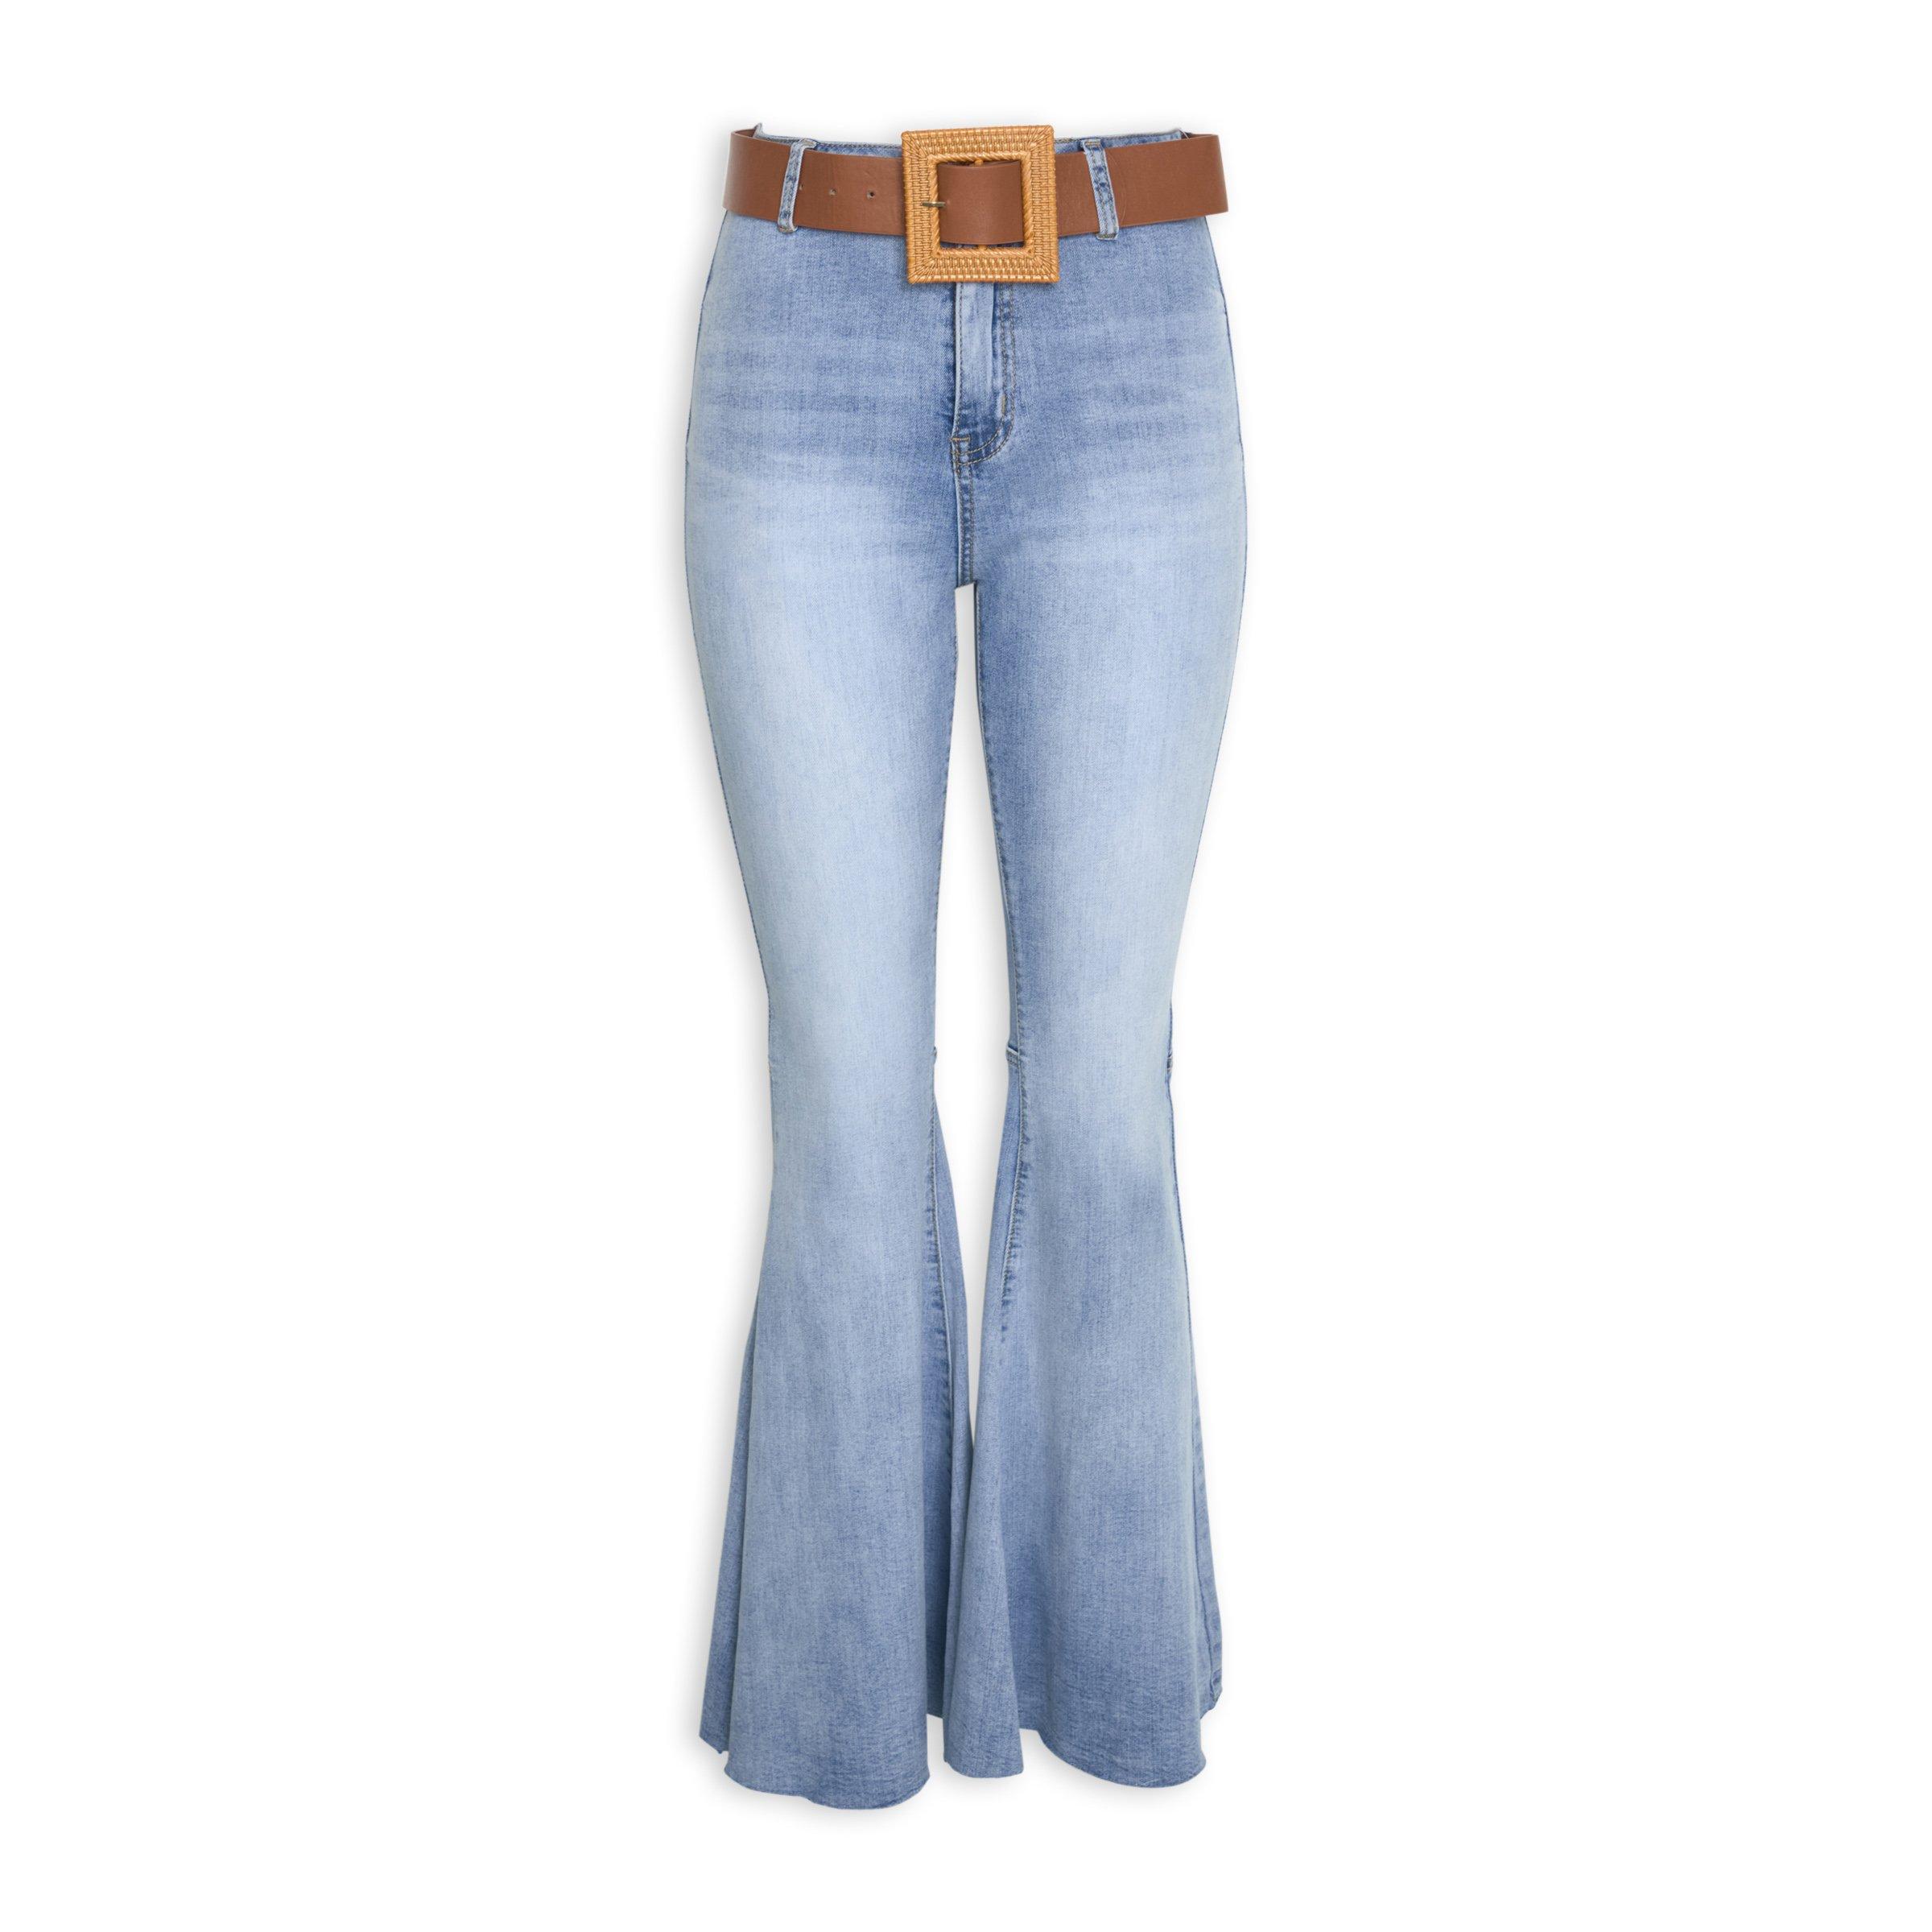 Buy Ginger Mary Light Wash Bootleg Jeans Online | Truworths